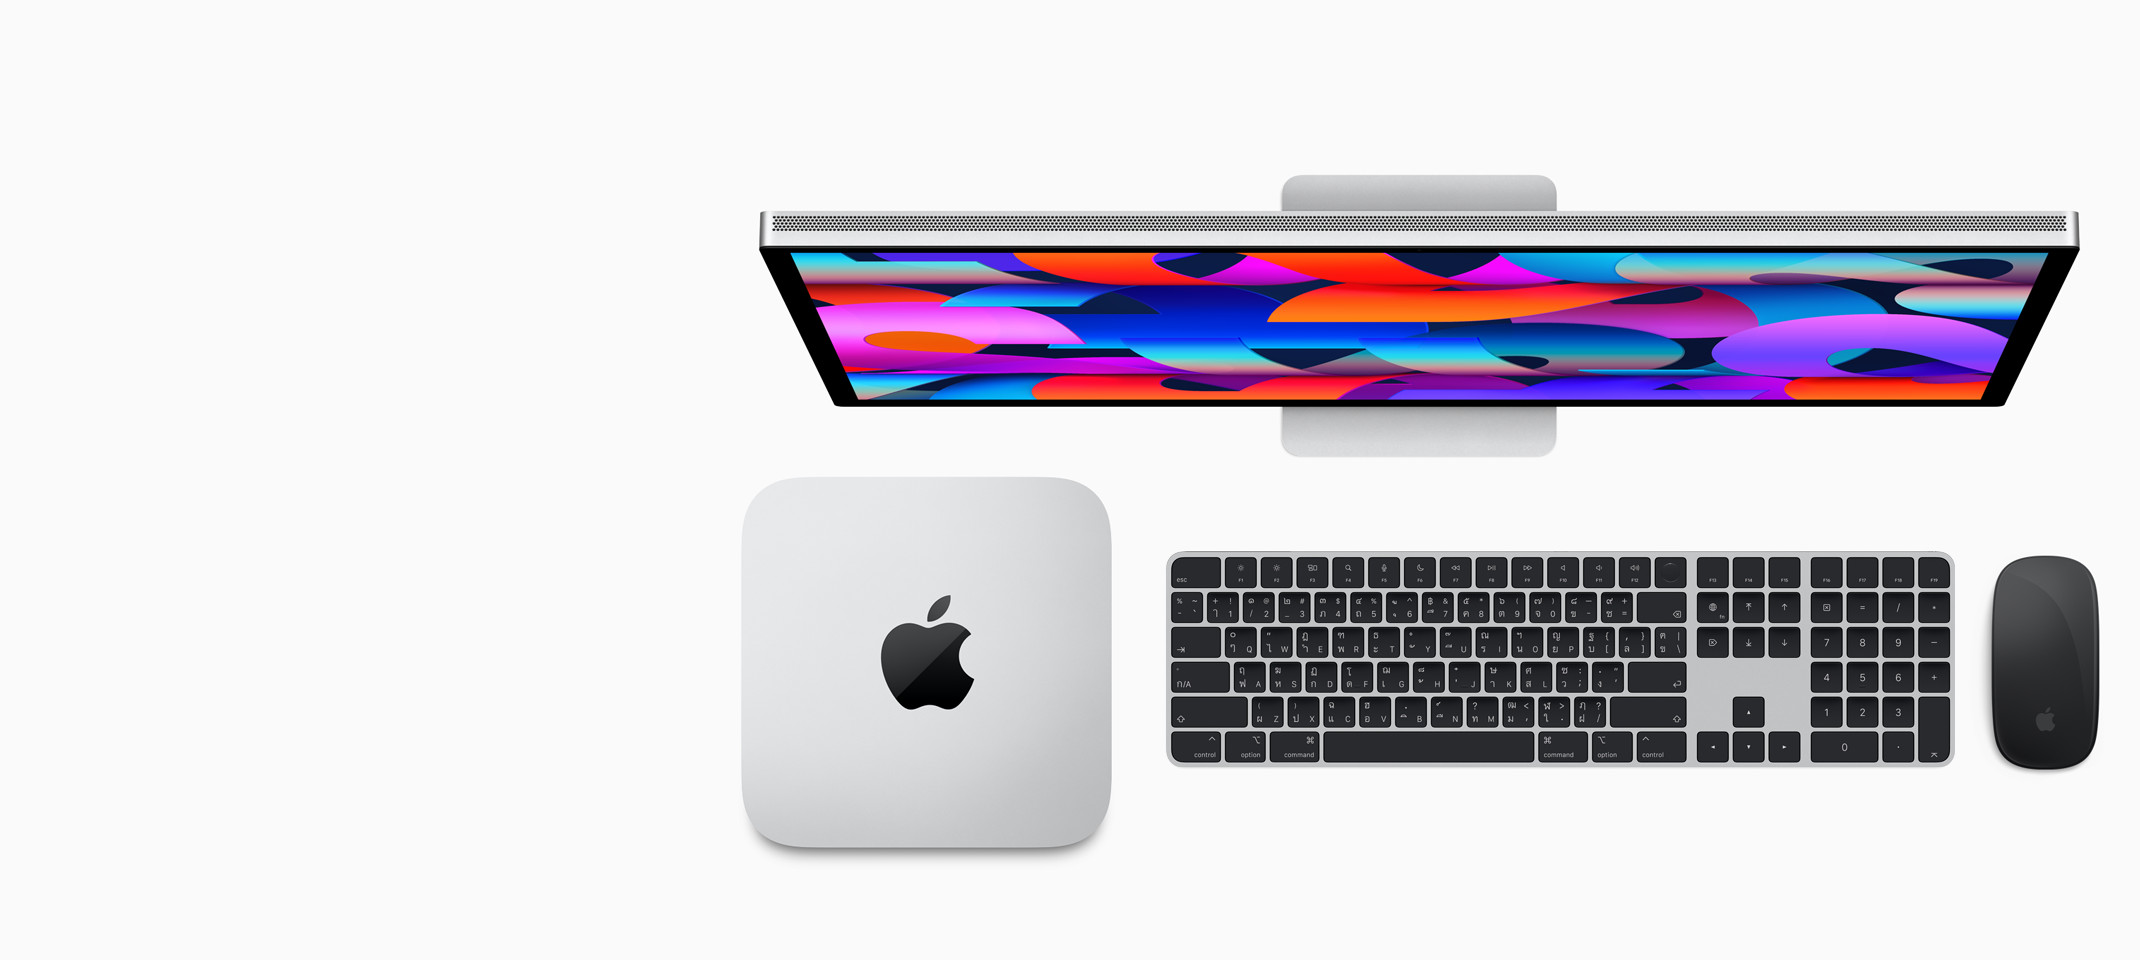 Studio Display และ Mac Studio มี Magic Keyboard พร้อม Touch ID และปุ่มตัวเลข และ Magic Mouse